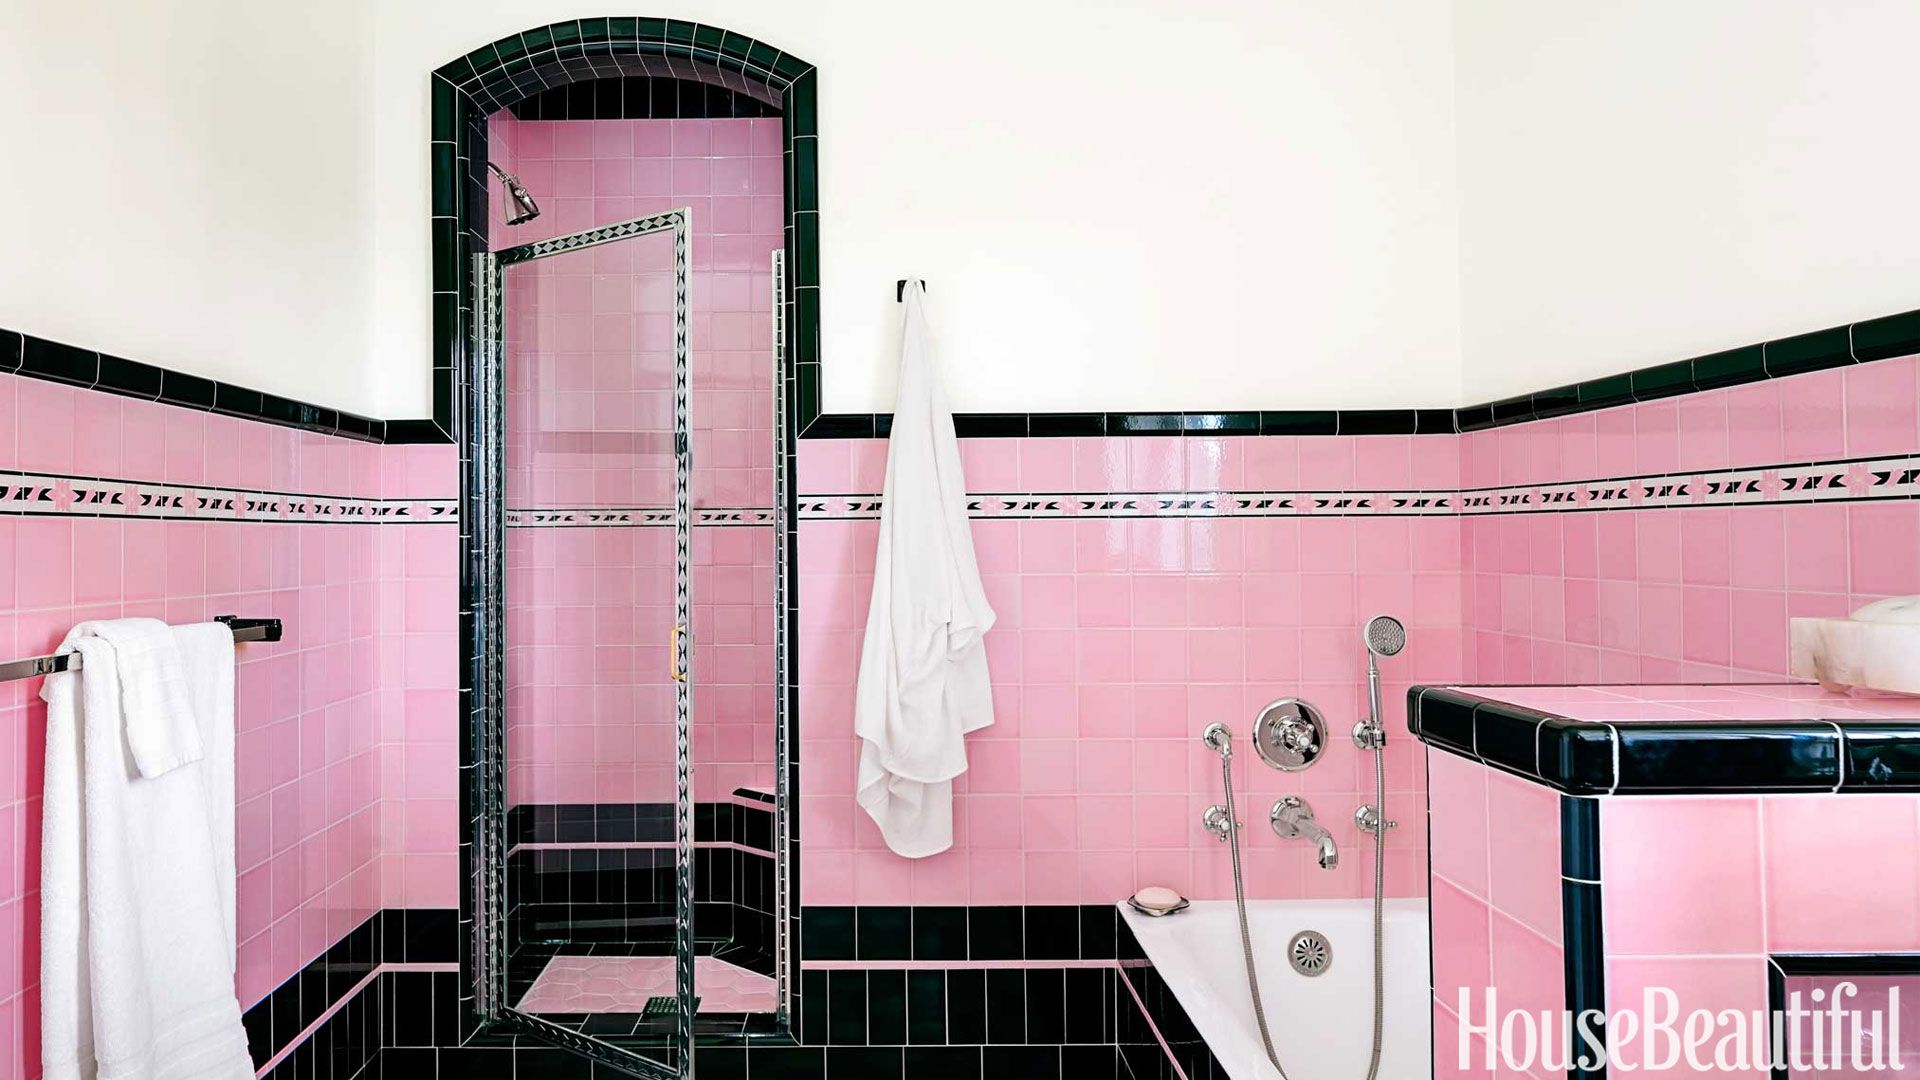 1930s Bathroom Design, Retro Bathroom Tile